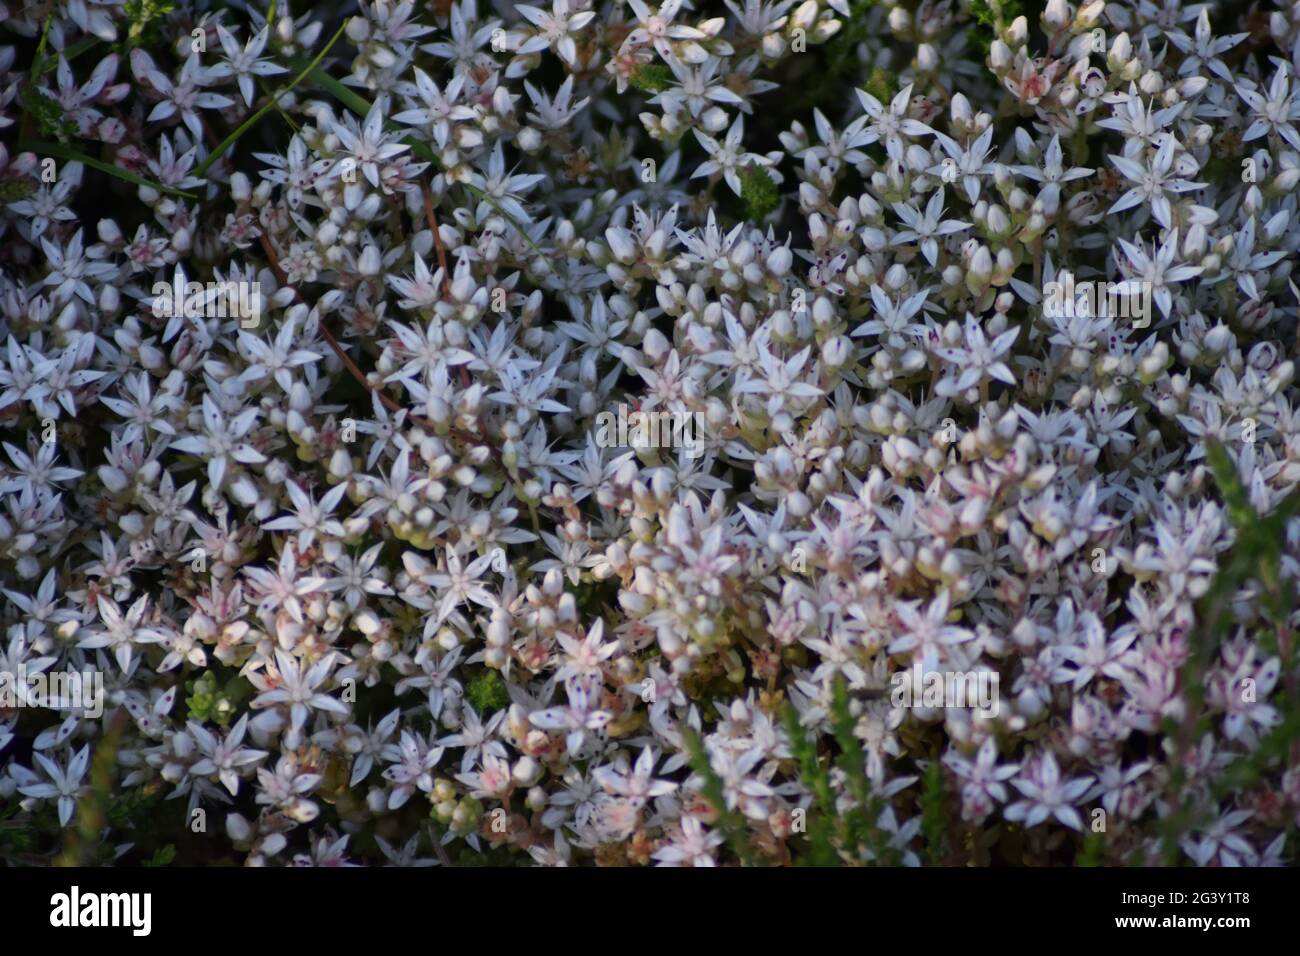 White Star shaped Flowers Stock Photo